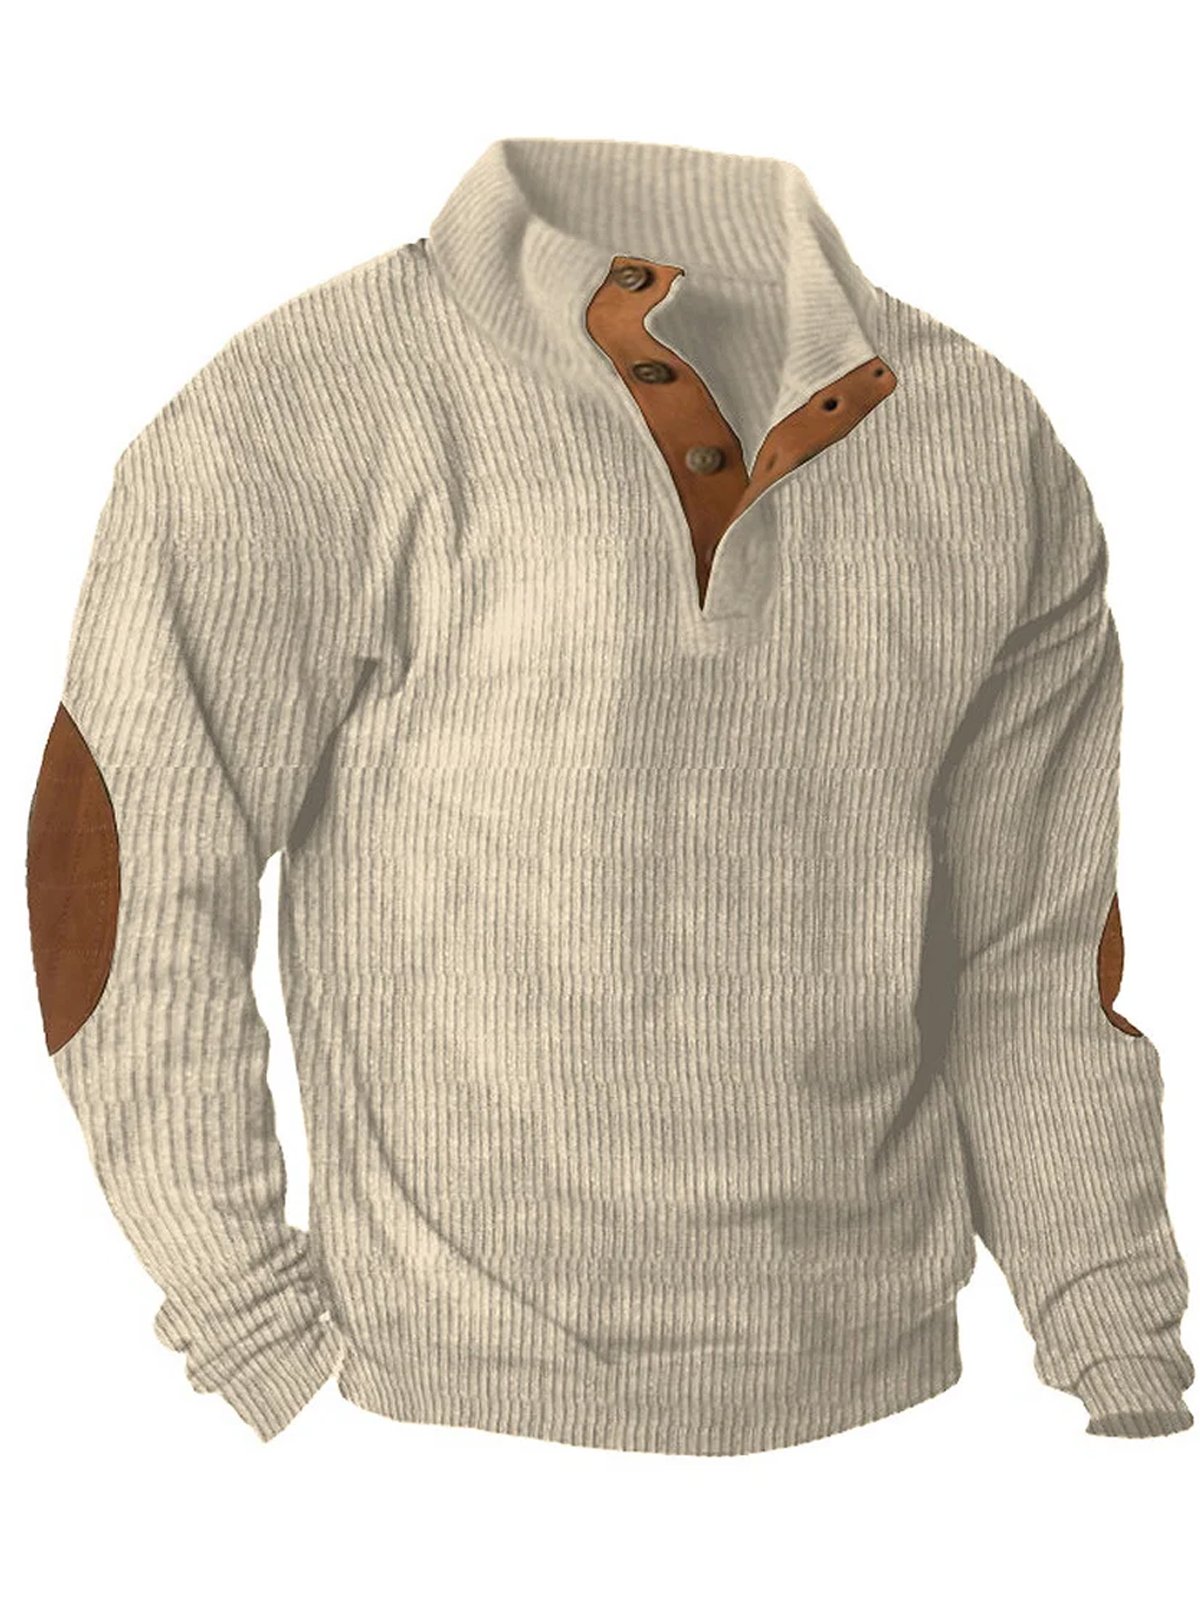 Royaura Men's Basic Corduroy Vintage Button Hoodie